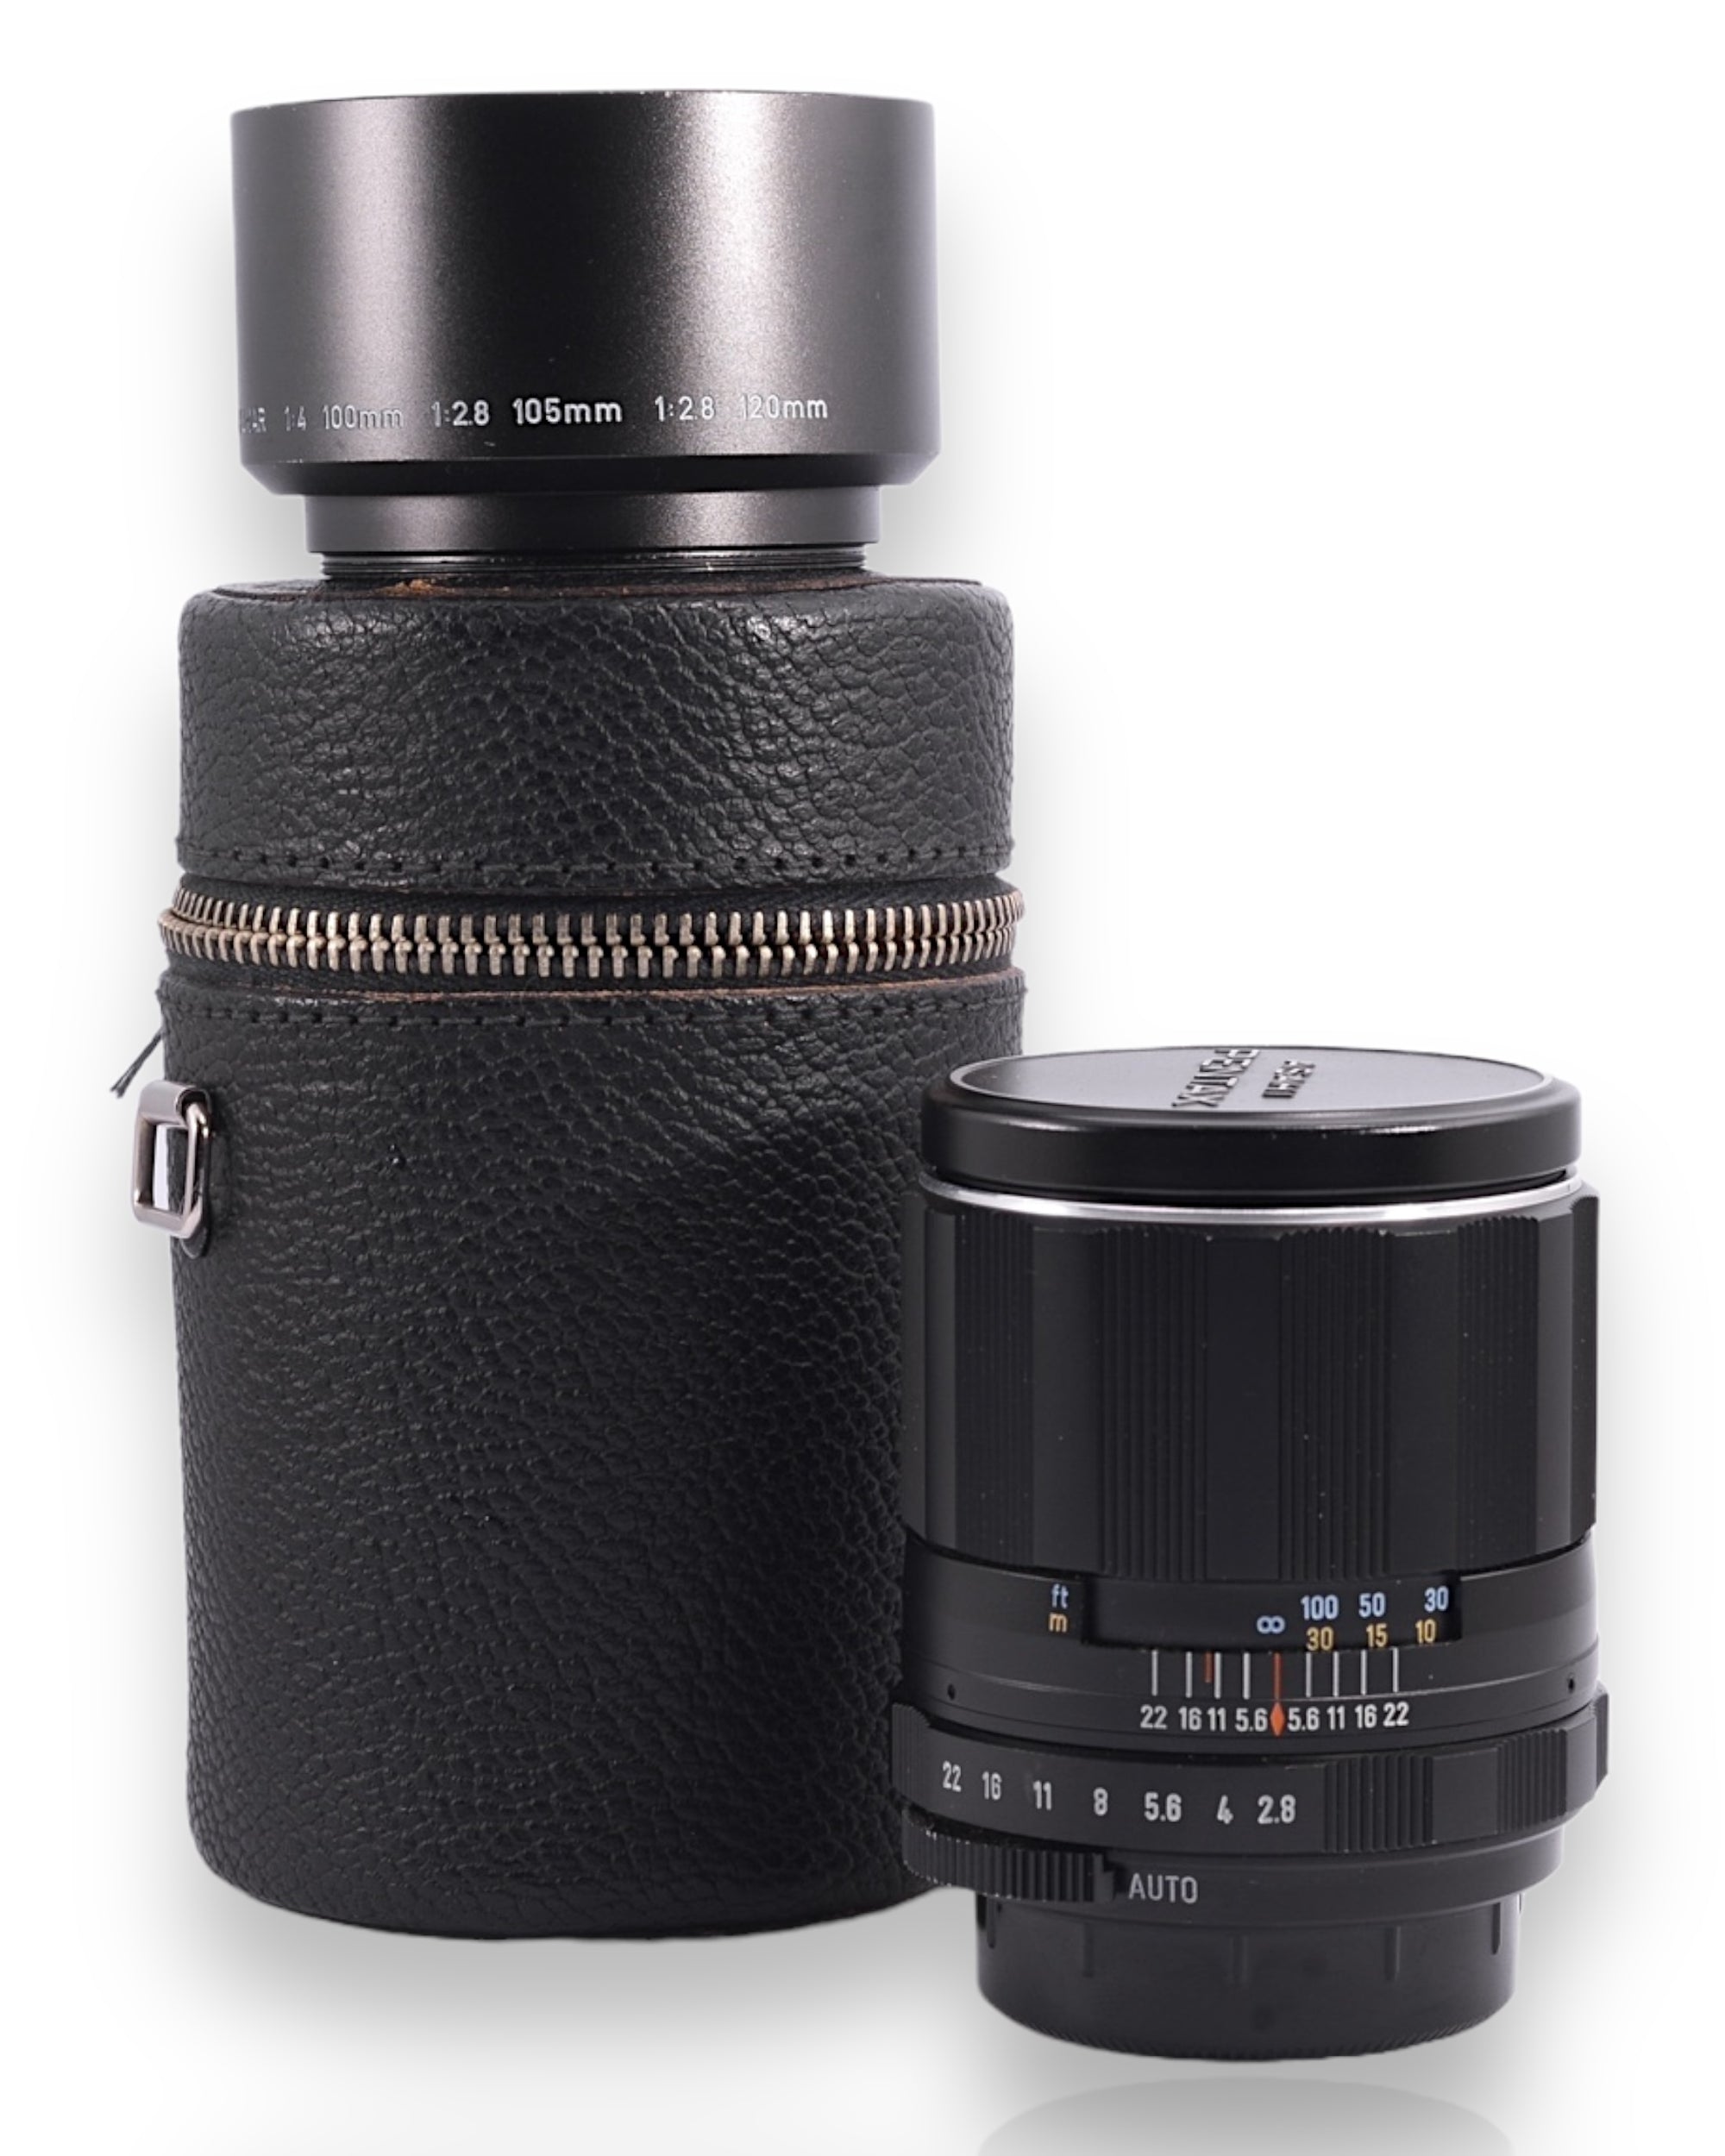 Super-Takumar 105mm f2.8 M42 lens